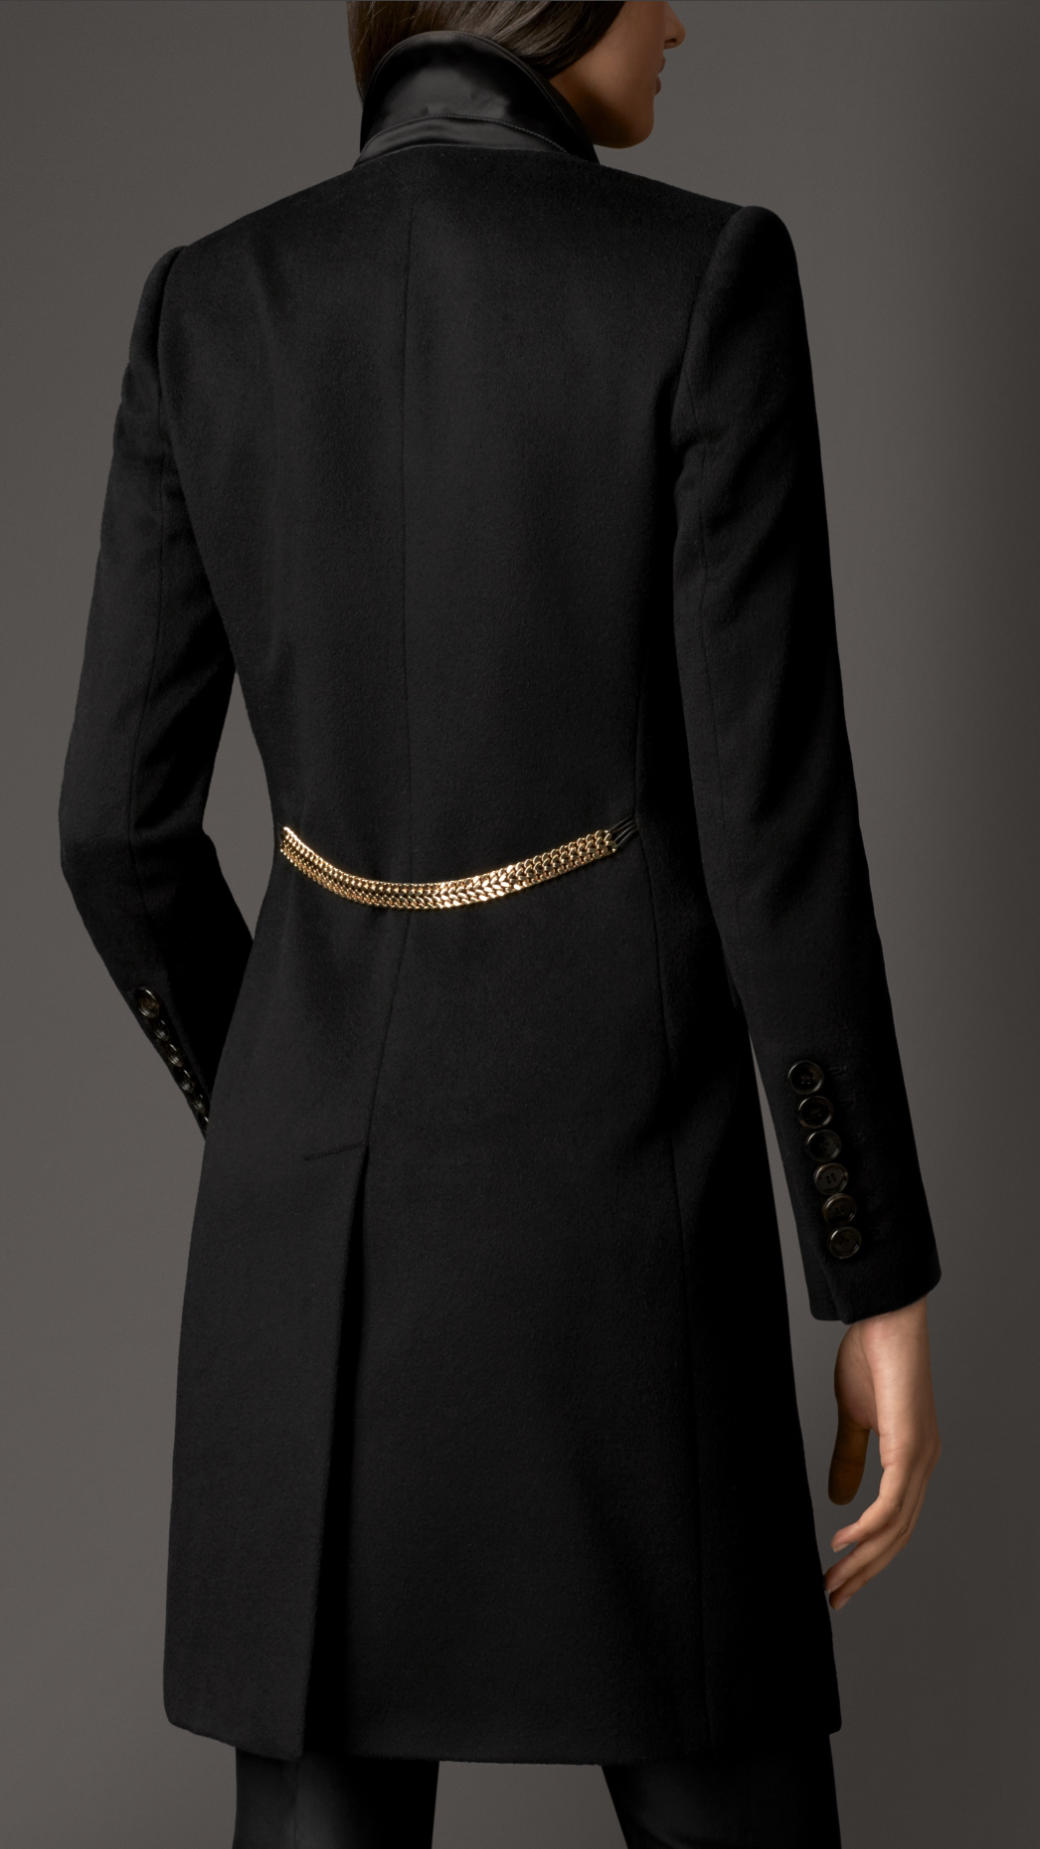 Burberry Chain Detail Cashmere Tuxedo Coat in Black | Lyst